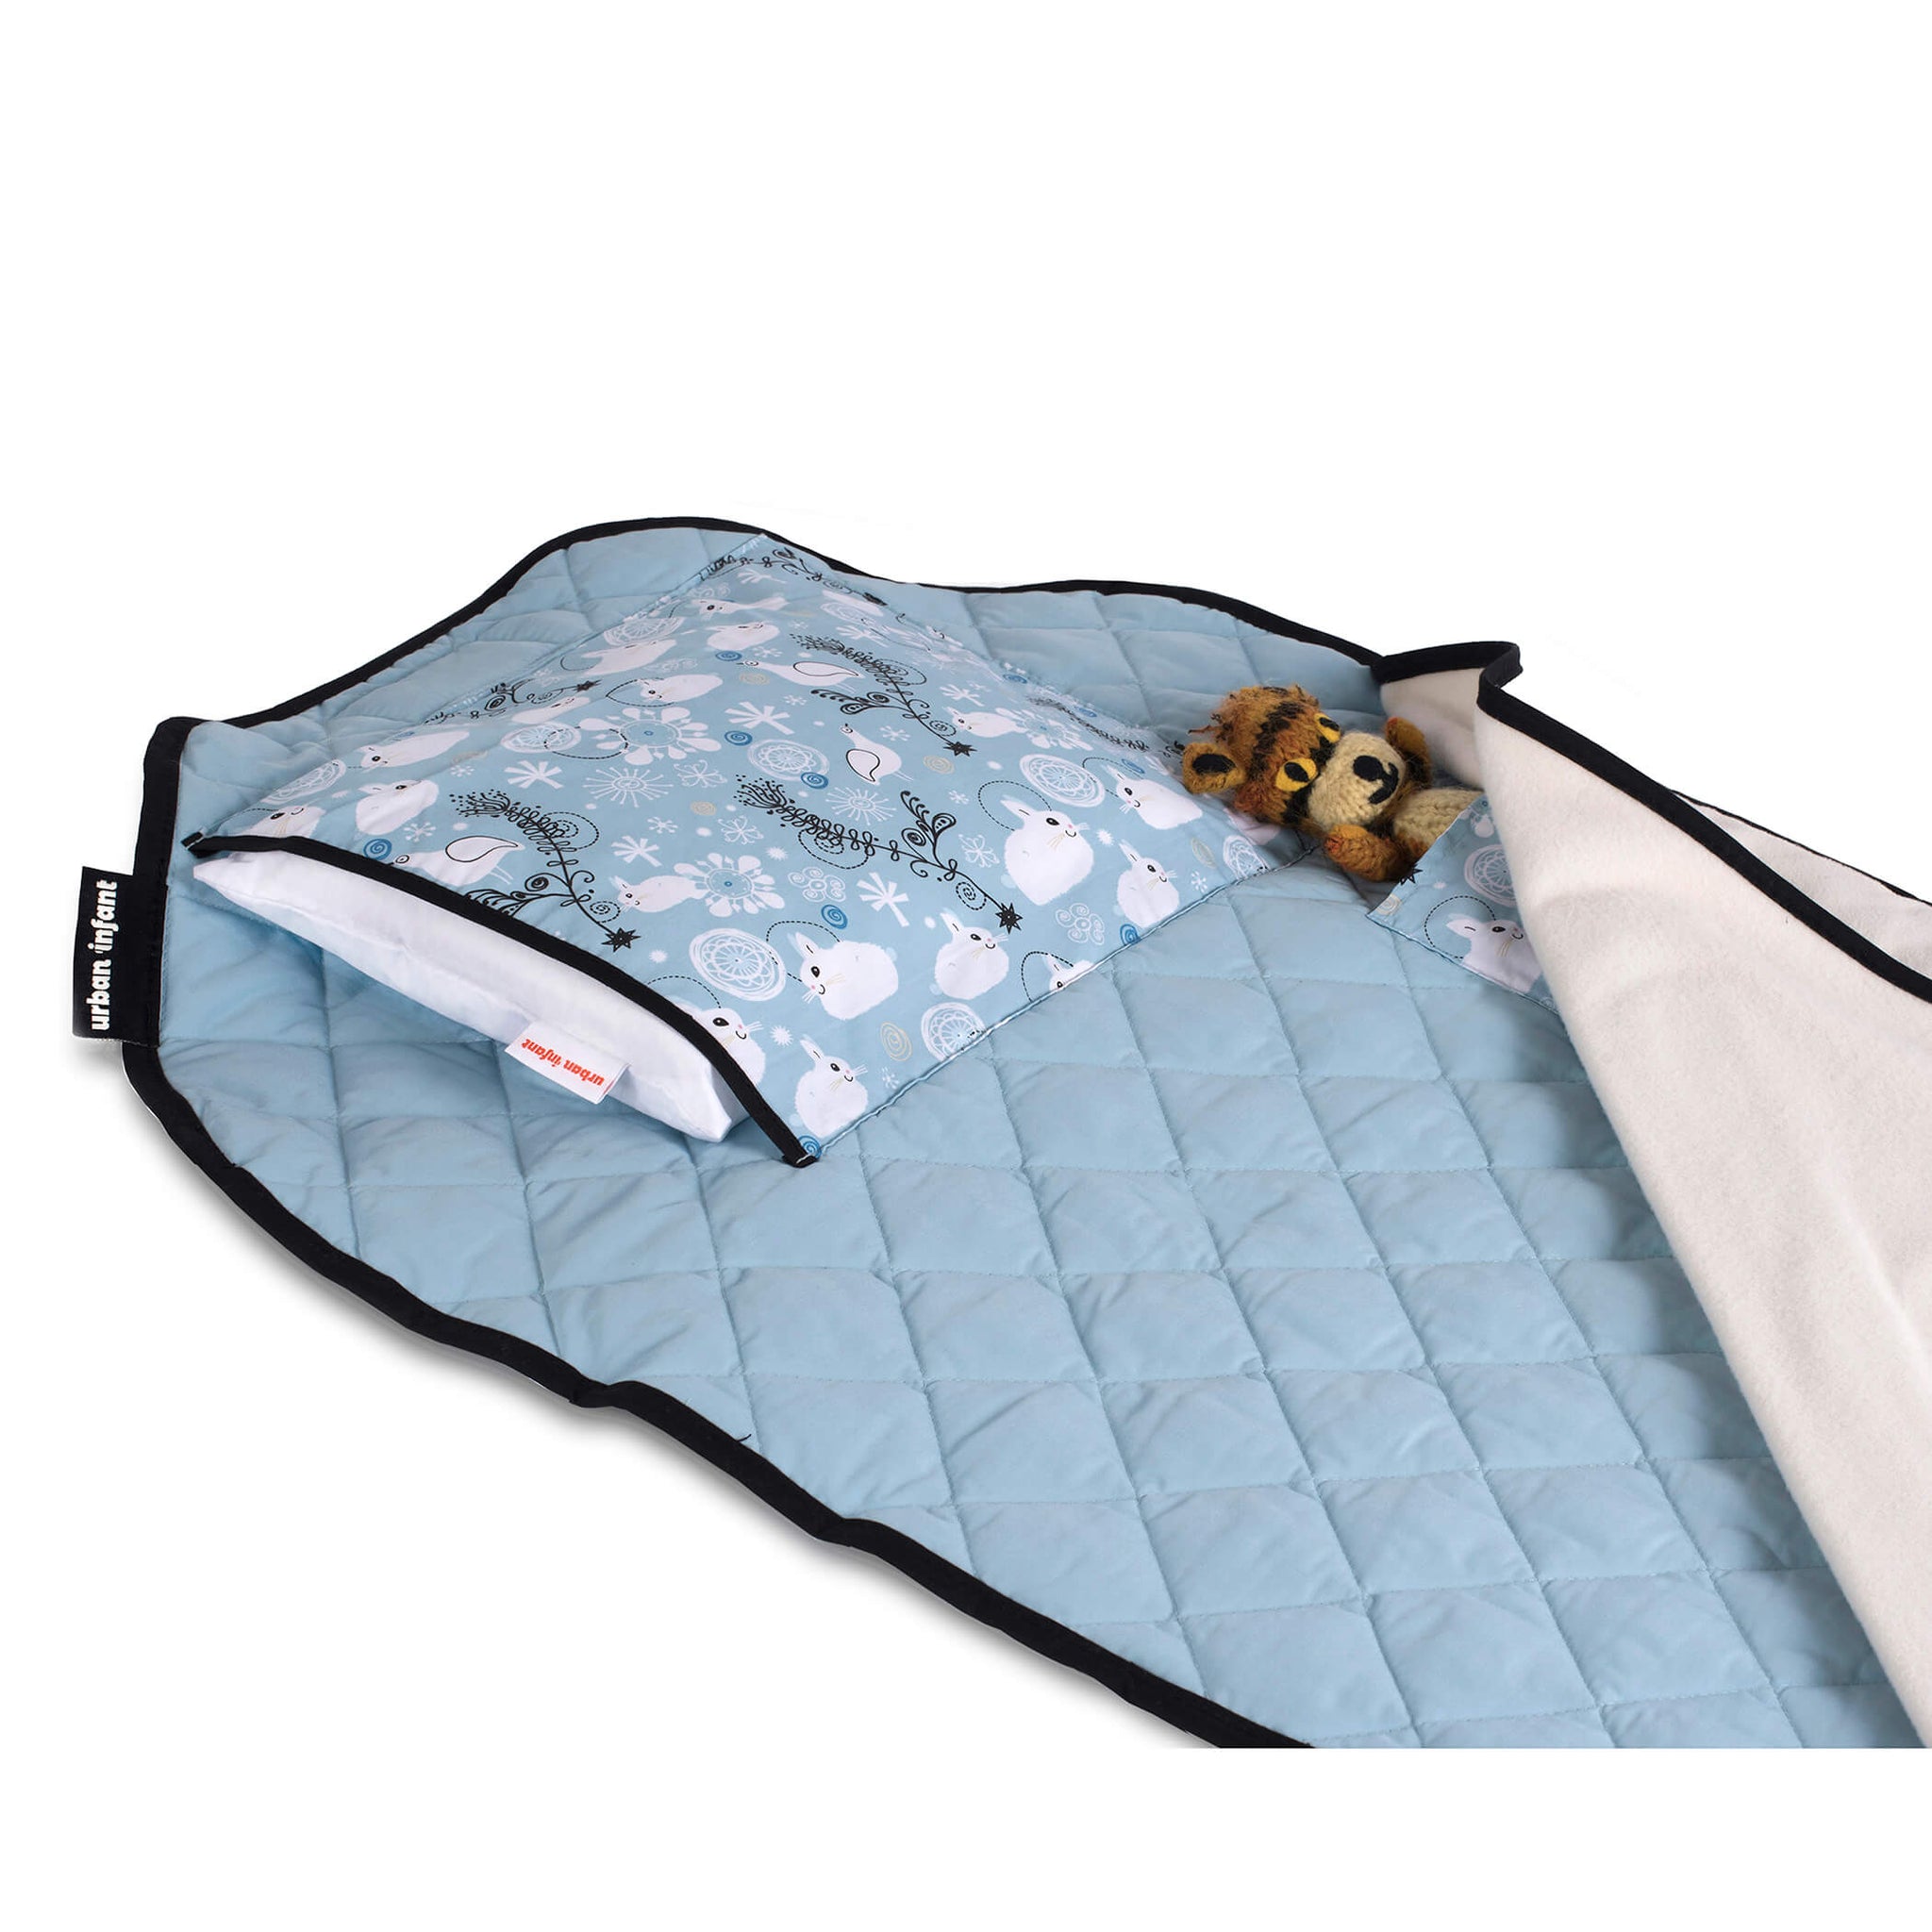 urban infant preschool toddler tot cot nap mat packie backpack bundle bunnies